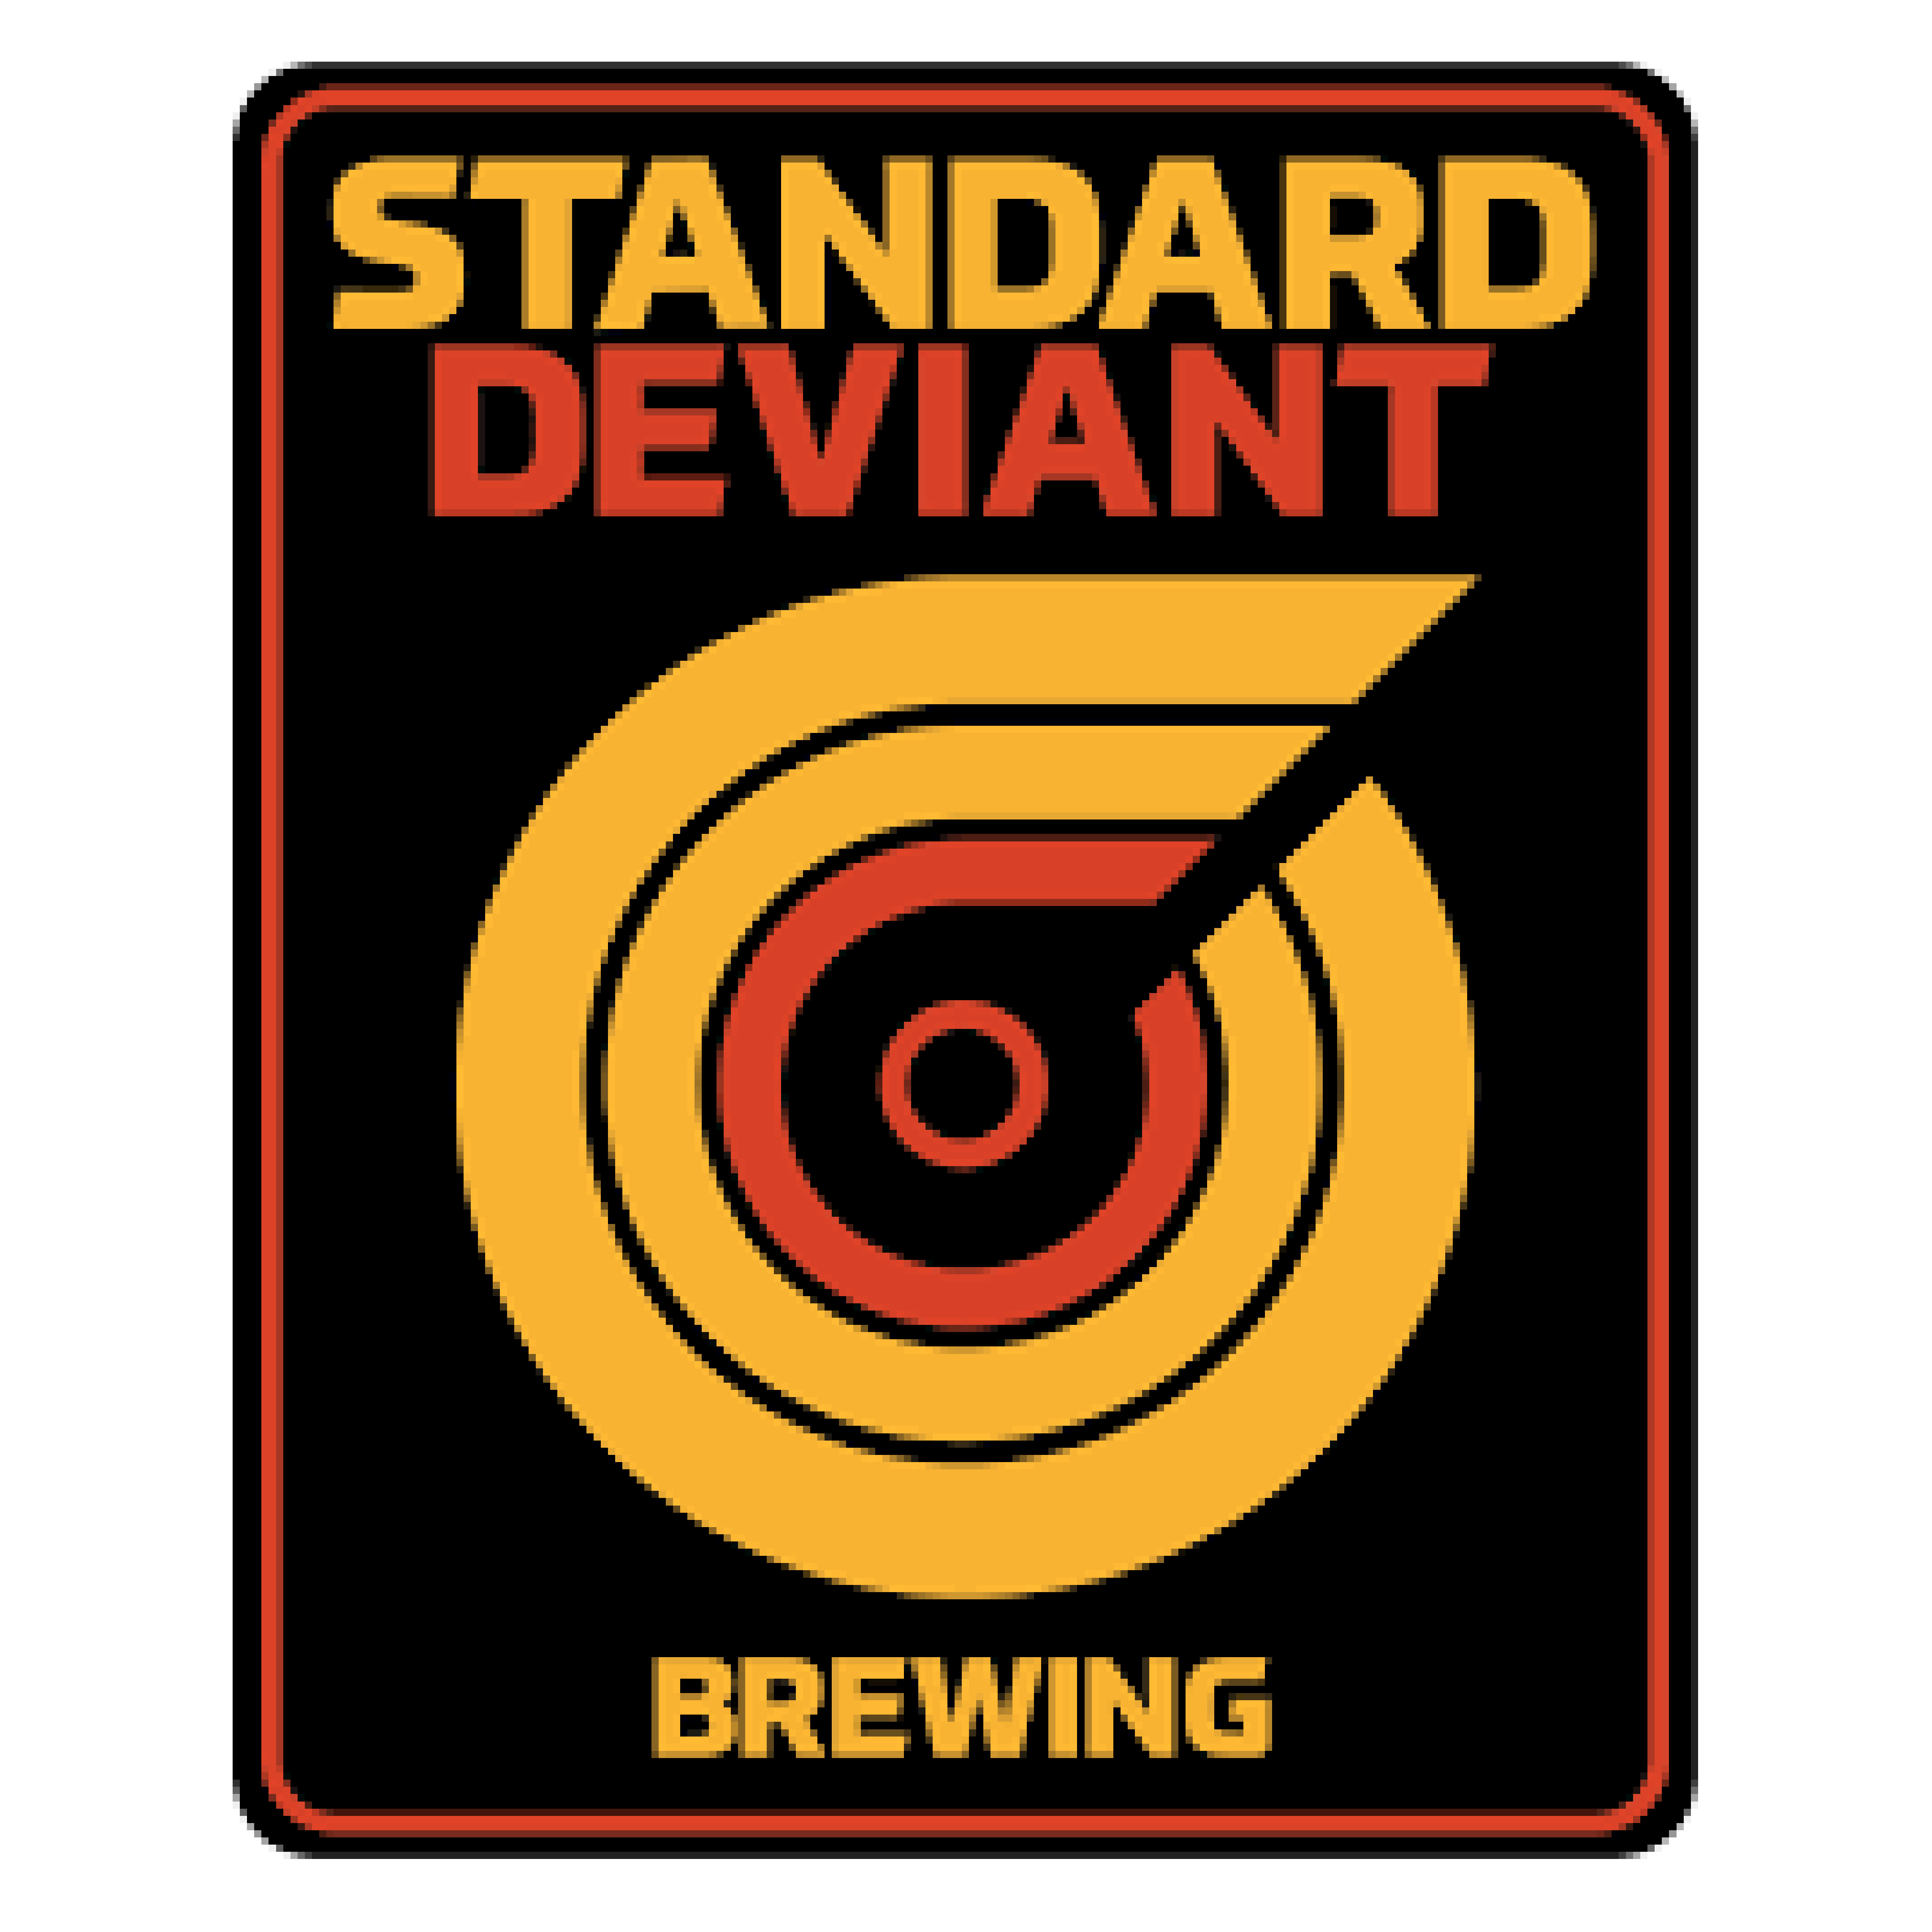 Standard Deviant Brewing